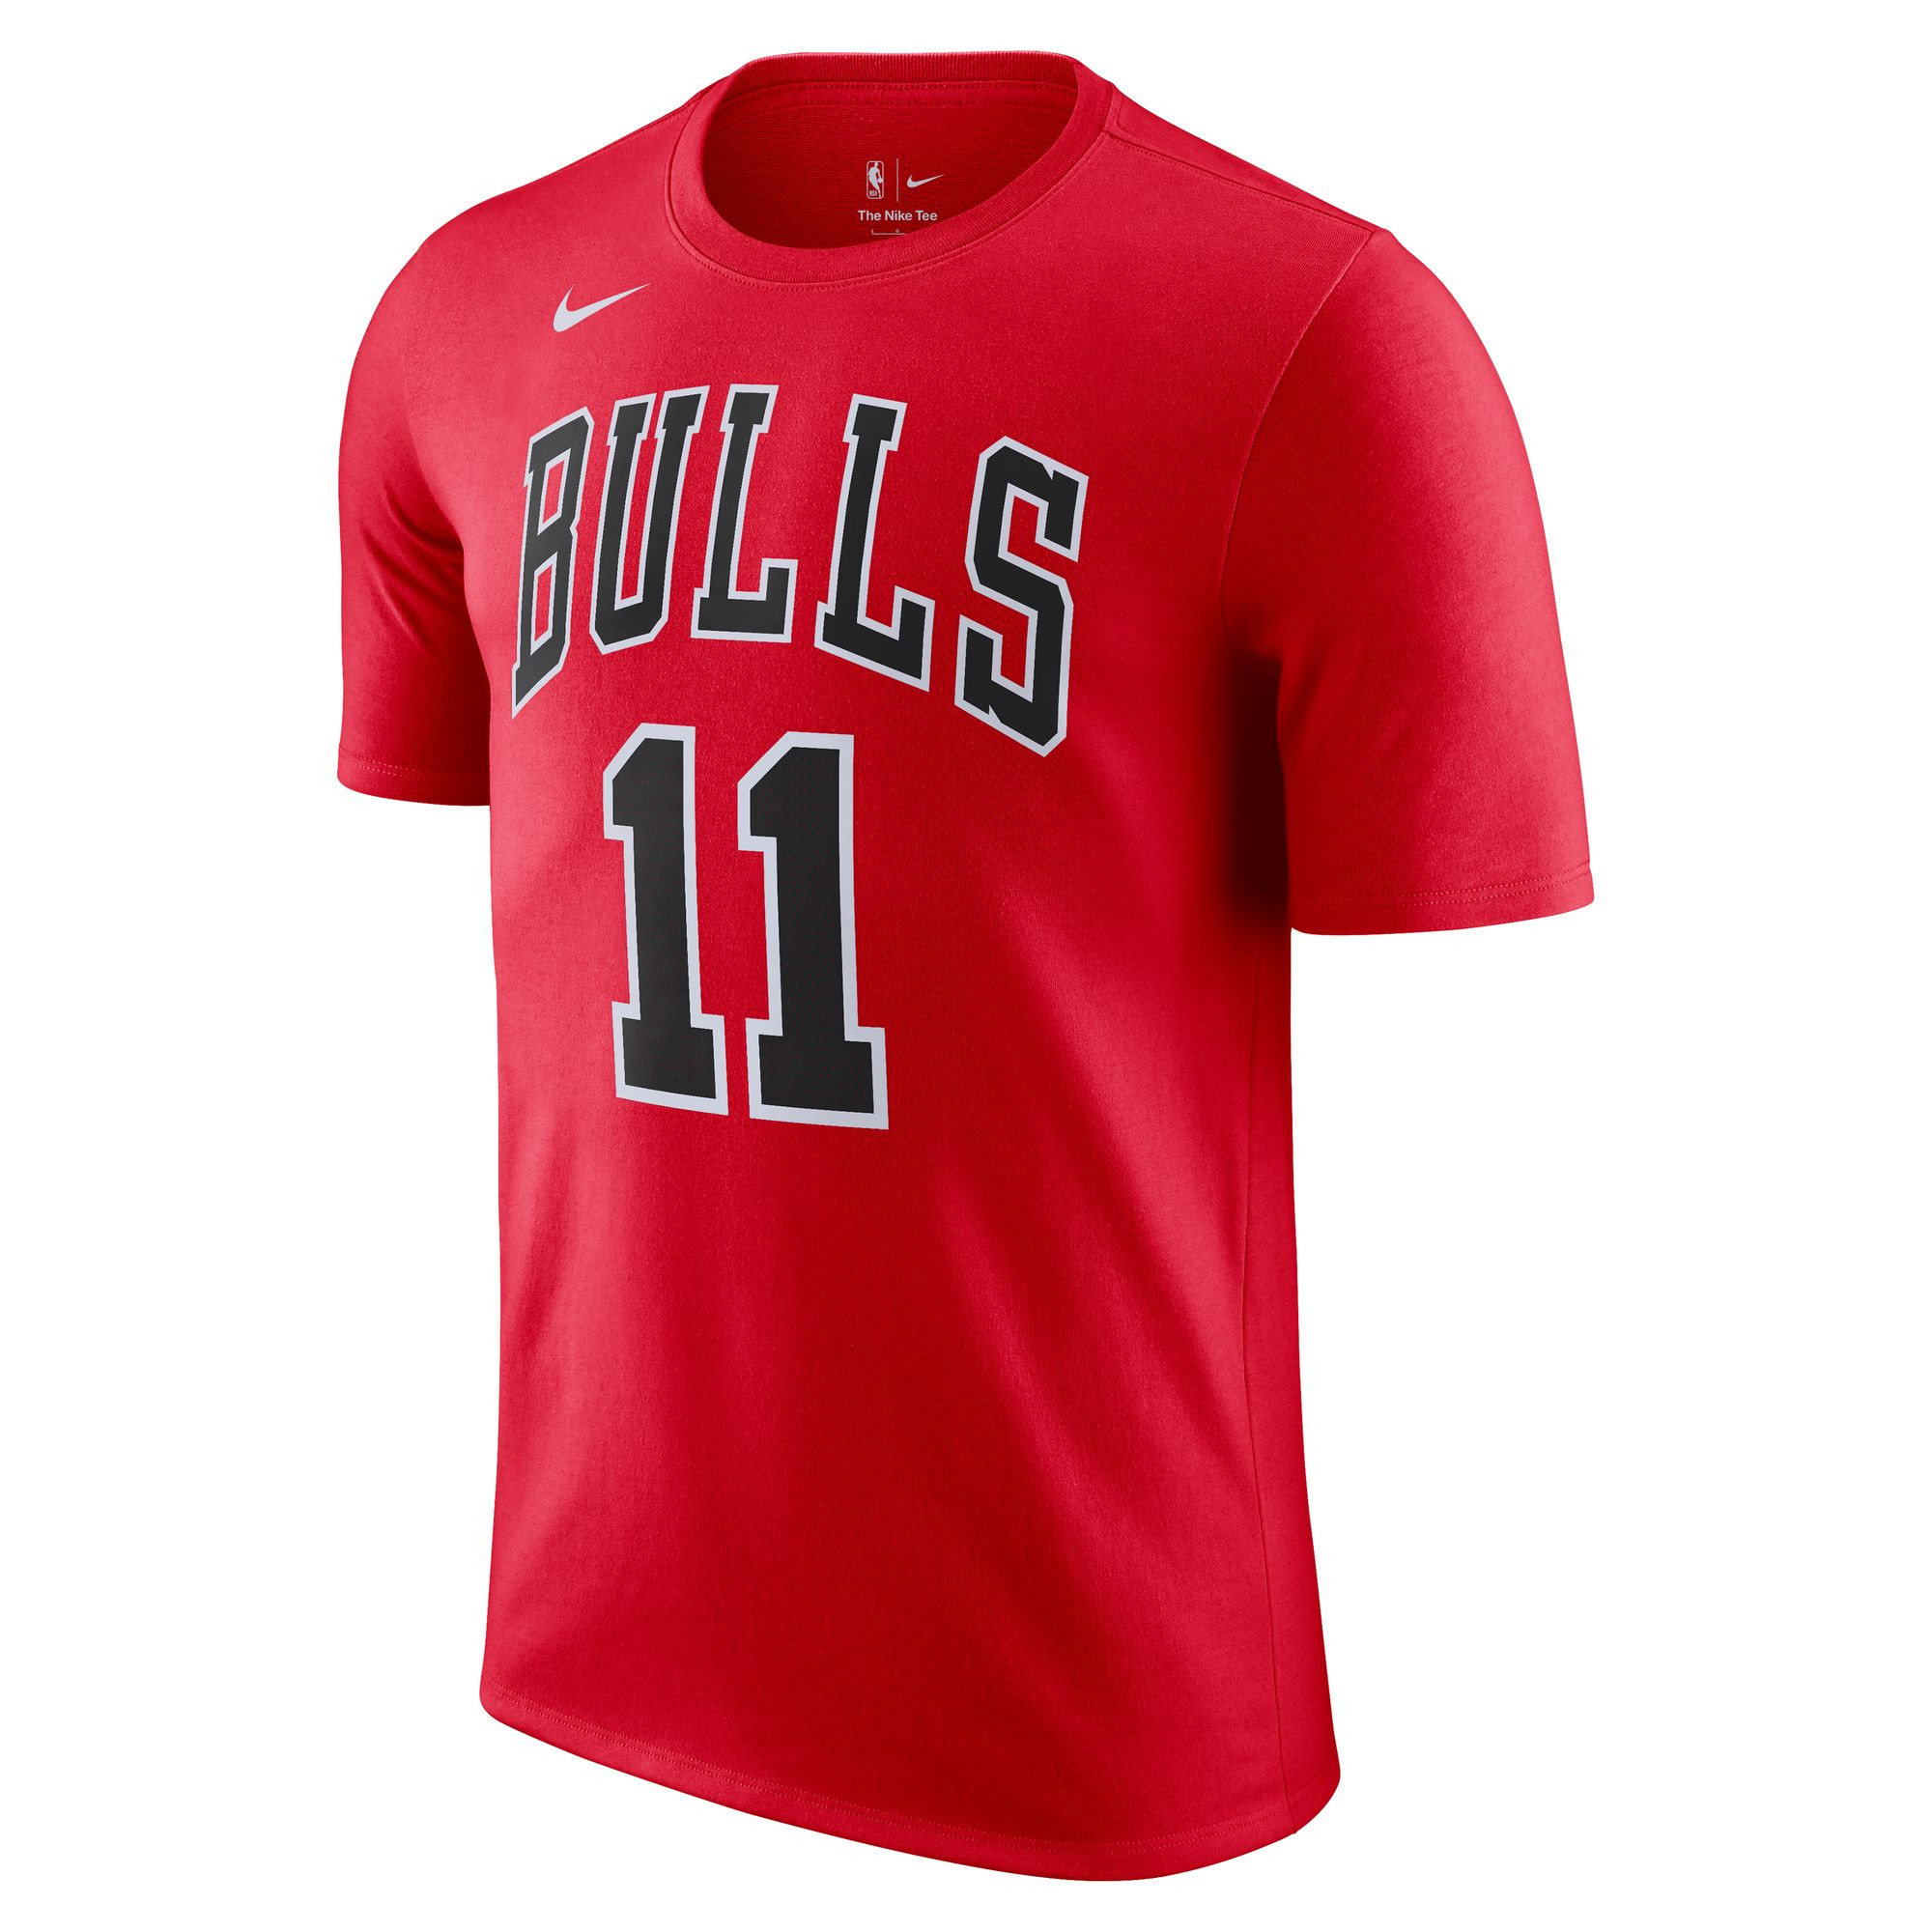 T-shirt manches courtes Nike DeMar DeRozan Chicago Bulls - University Red